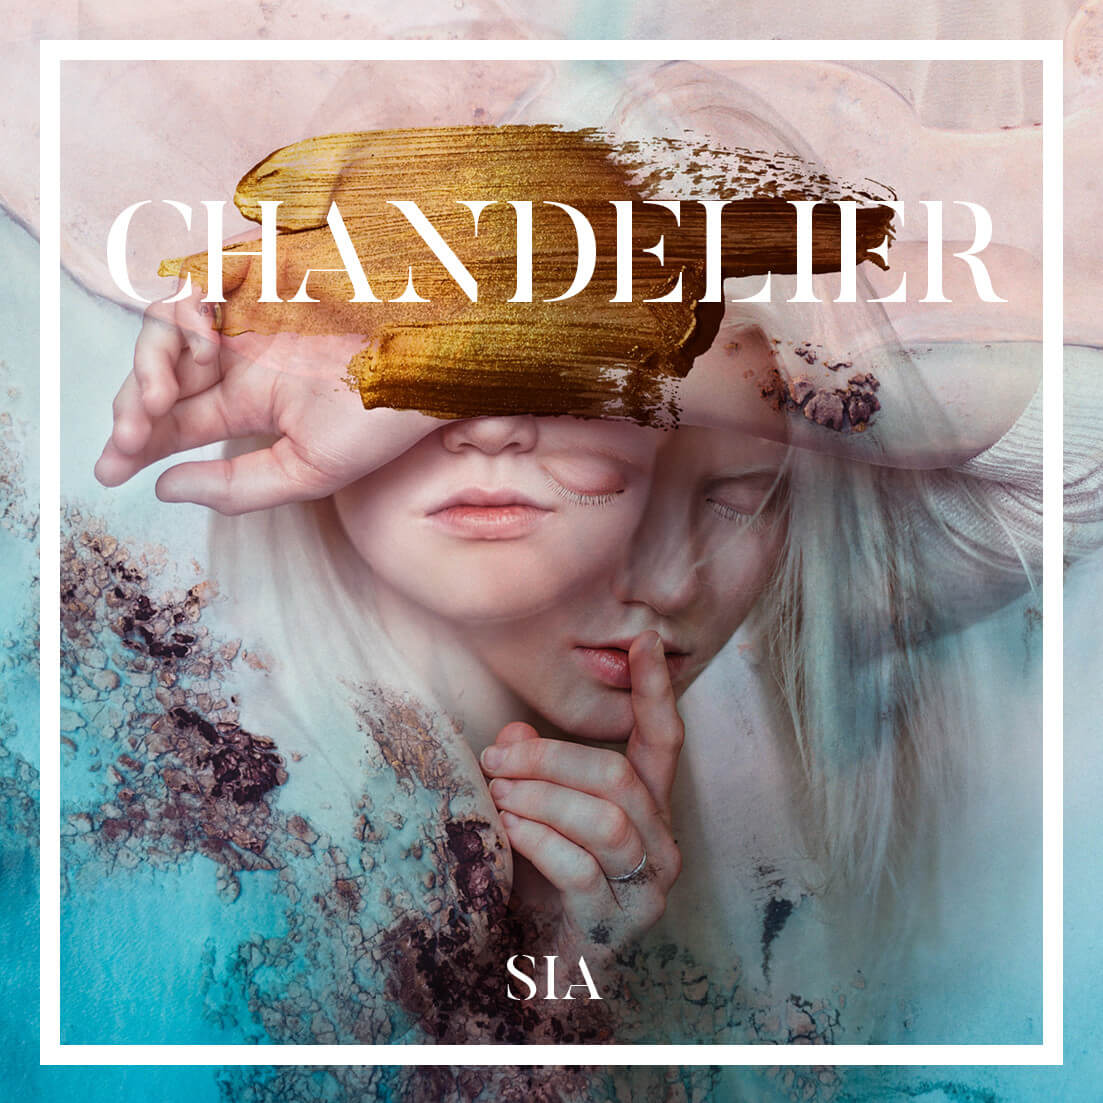 Chandelier by SIA (source: i-manipulate.artstation.com/)